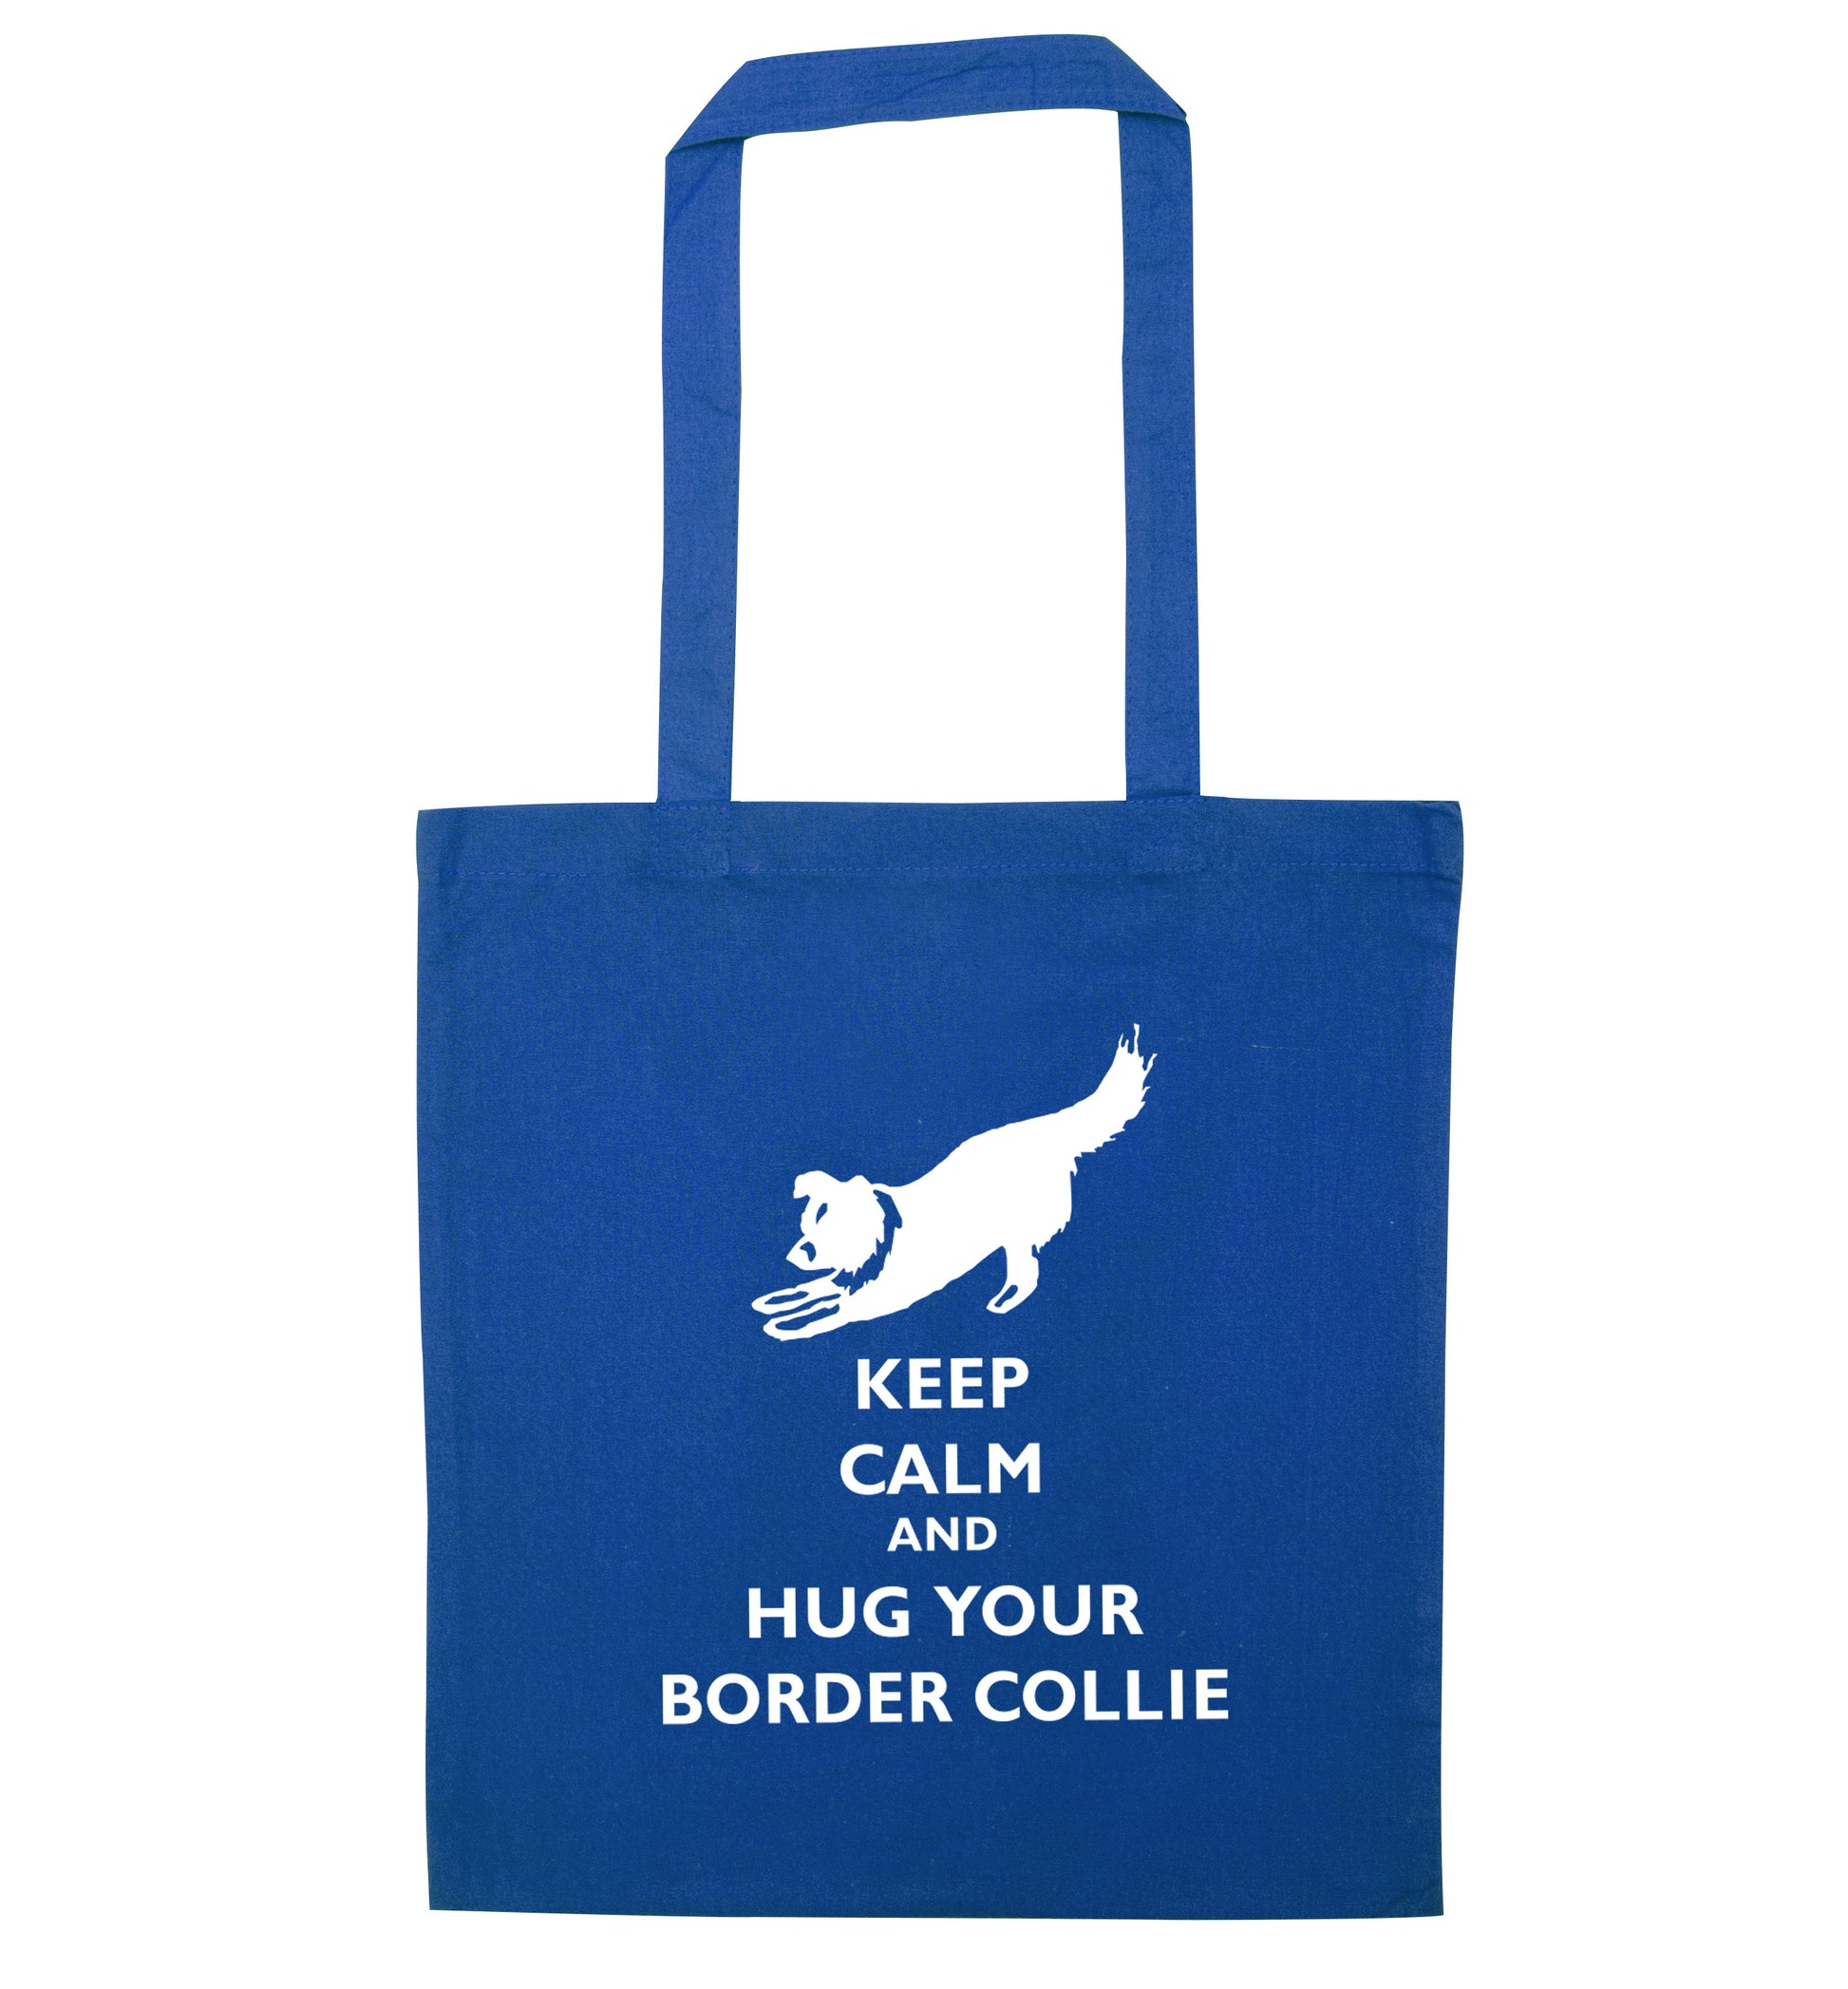 Keep calm and hug your border collie blue tote bag